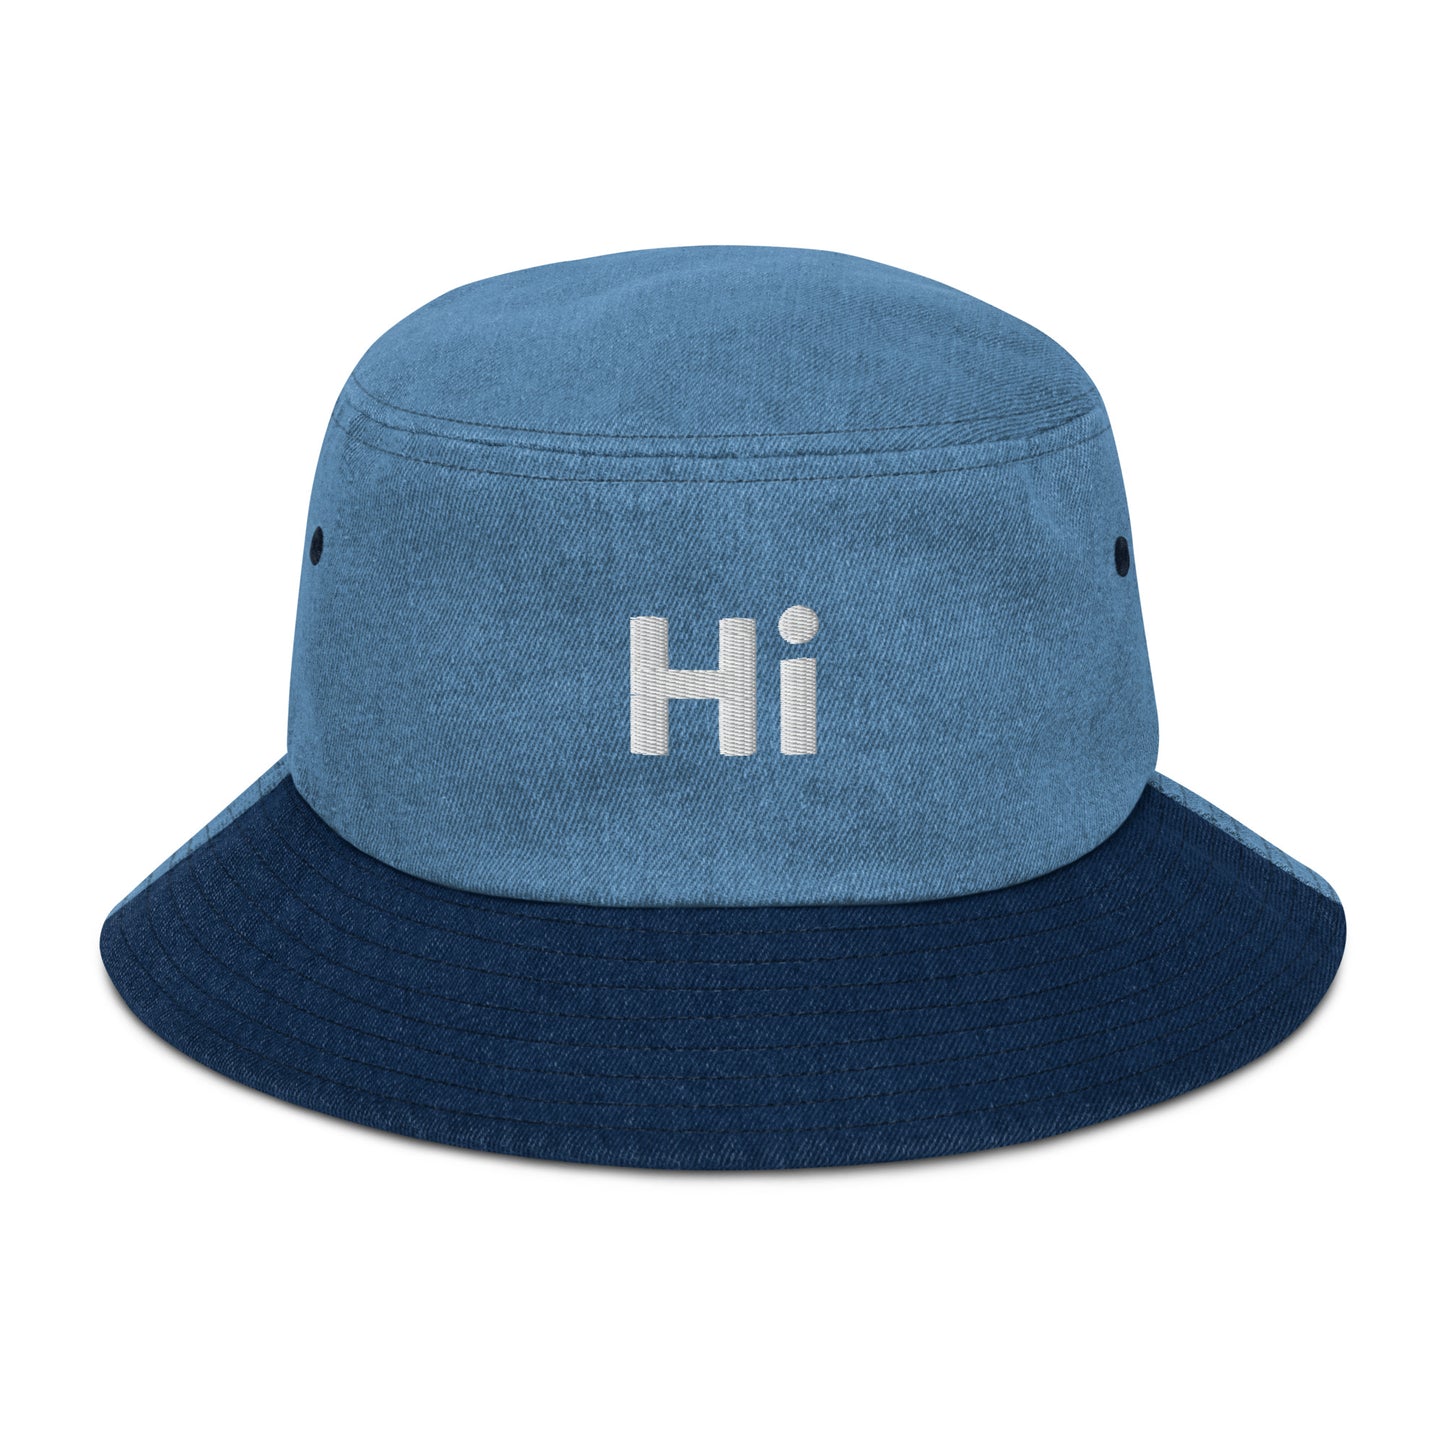 Hi Happy interactions Denim Bucket Hat in Two-tone Blue Denim